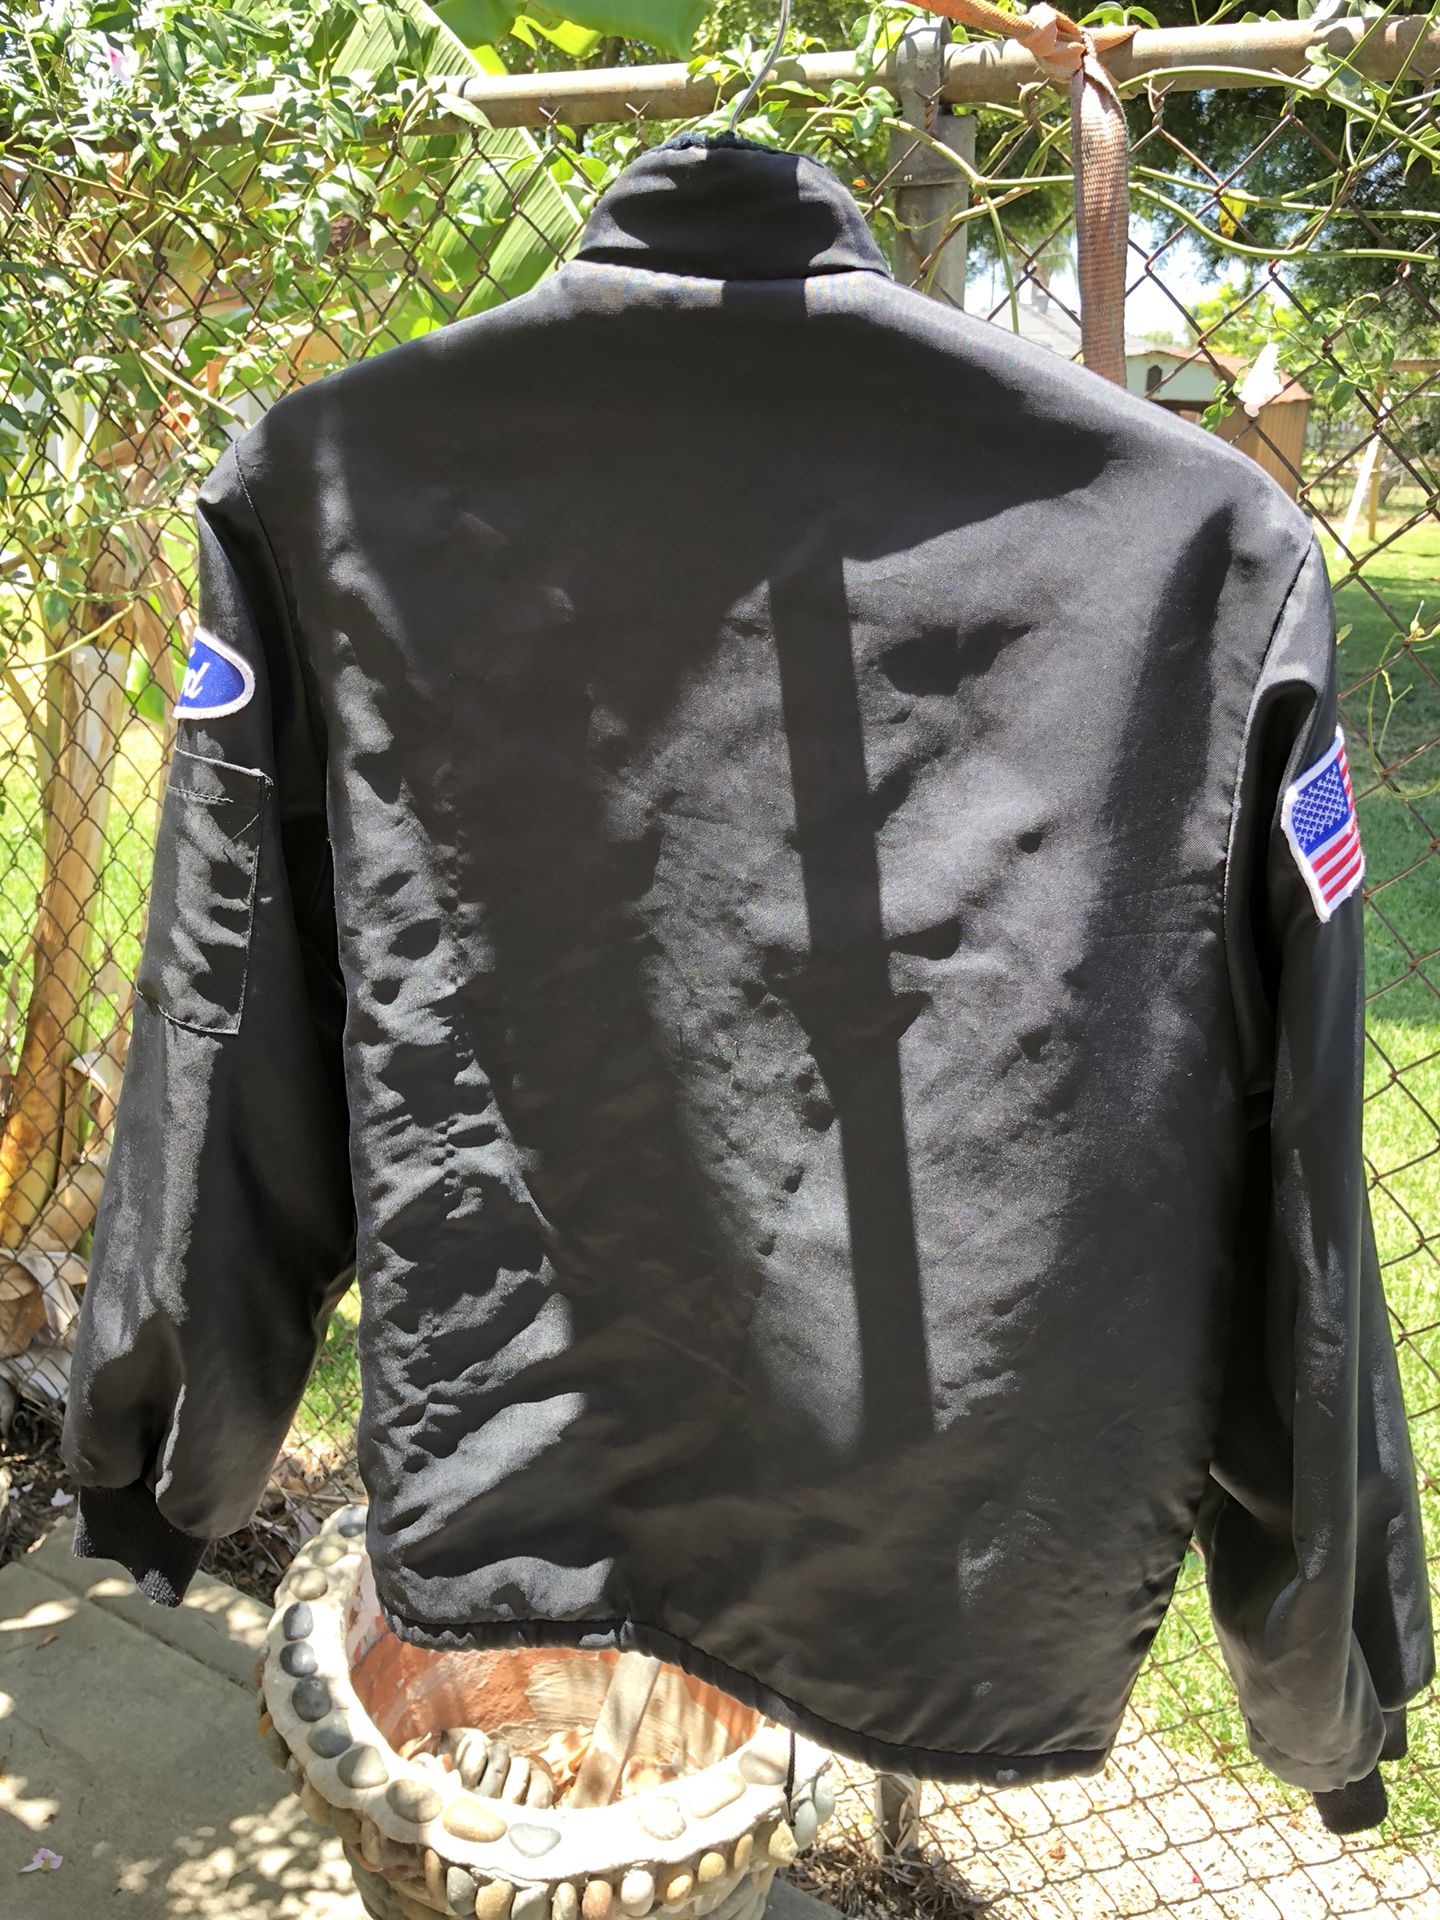 Tweety's authentic racing jacket for Sale in Phoenix, AZ - OfferUp